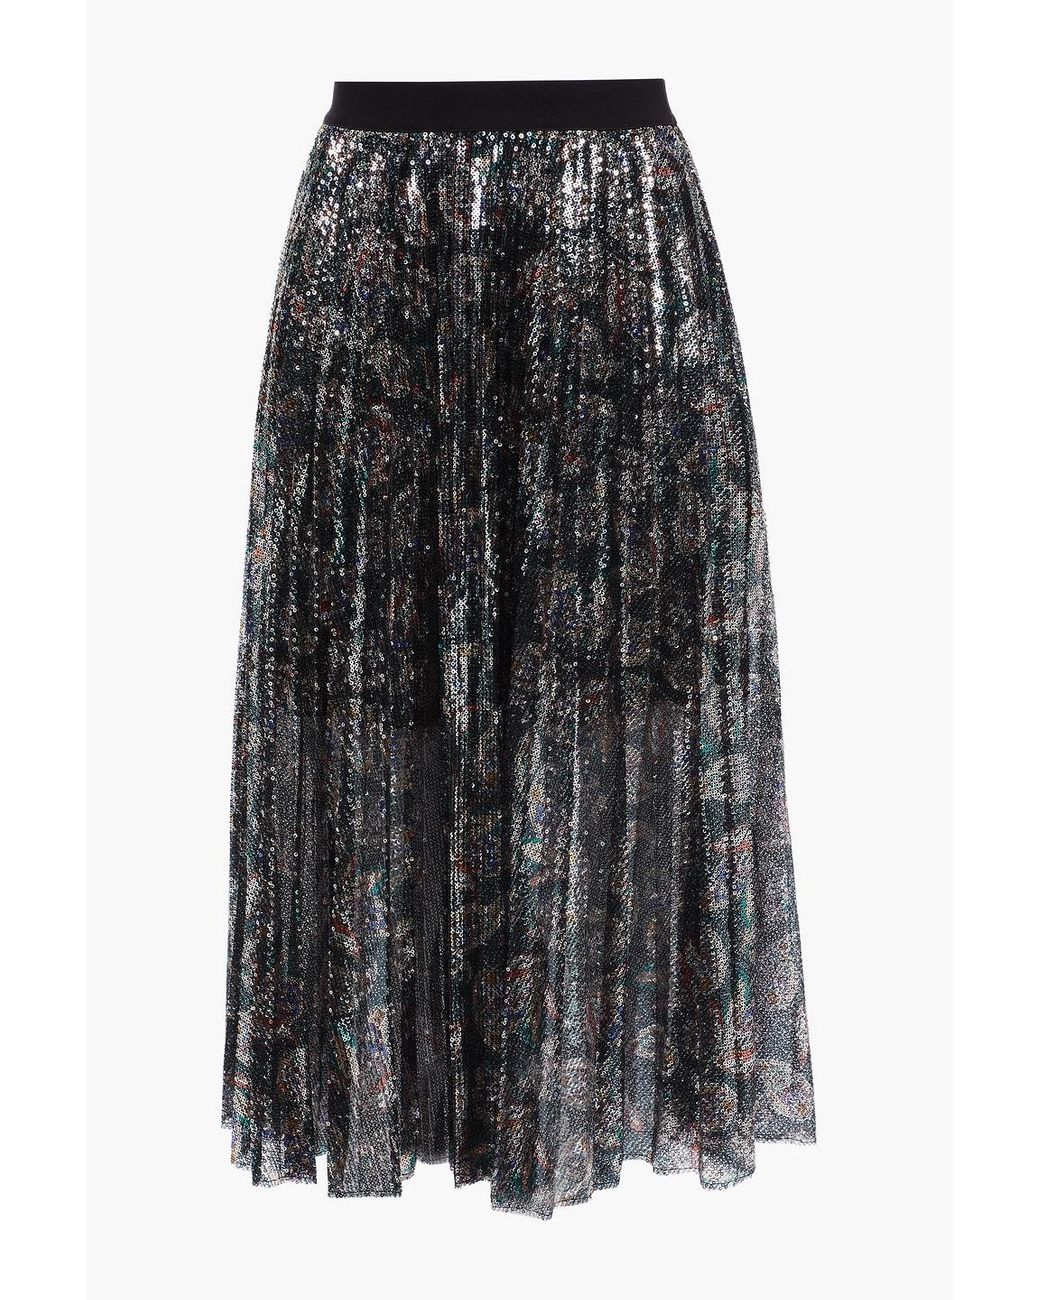 Maje Jilio Pleated Sequined Tulle Midi Skirt in Black | Lyst